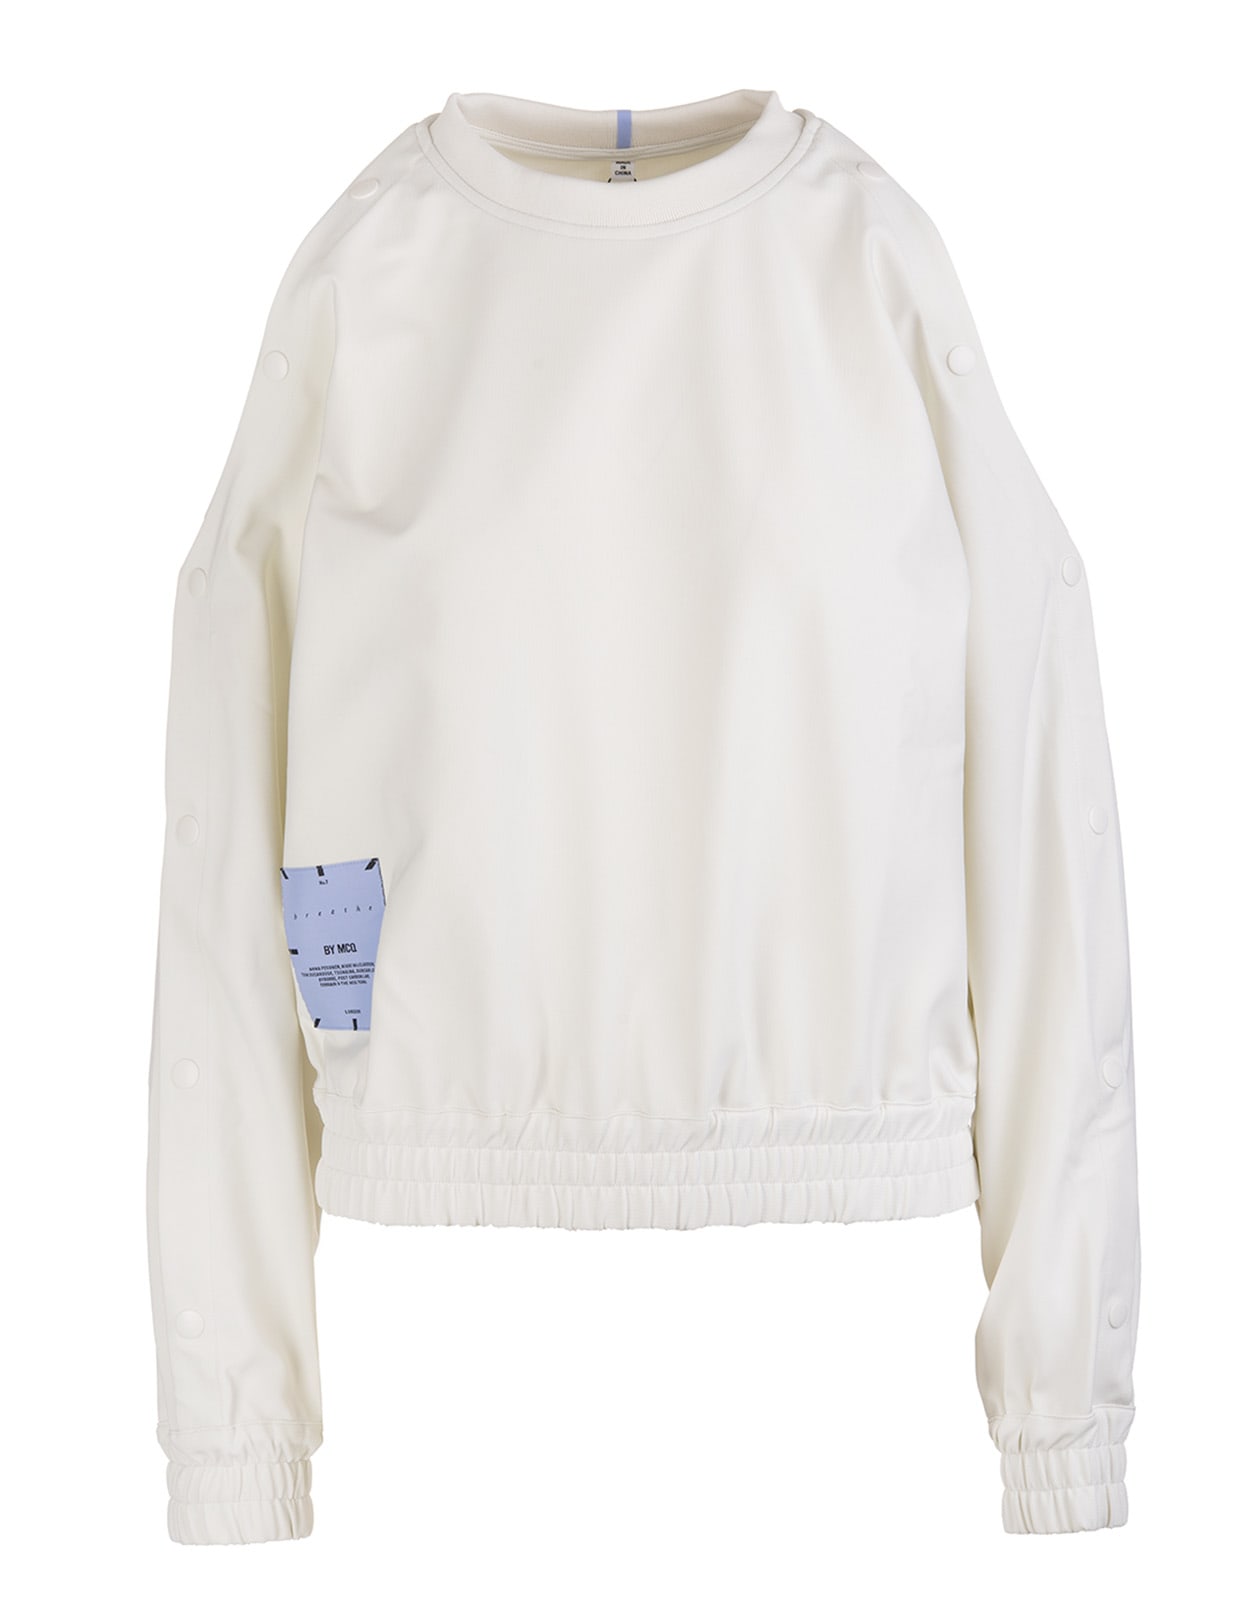 McQ Alexander McQueen Woman White Sweatshirt With Off Shoulders